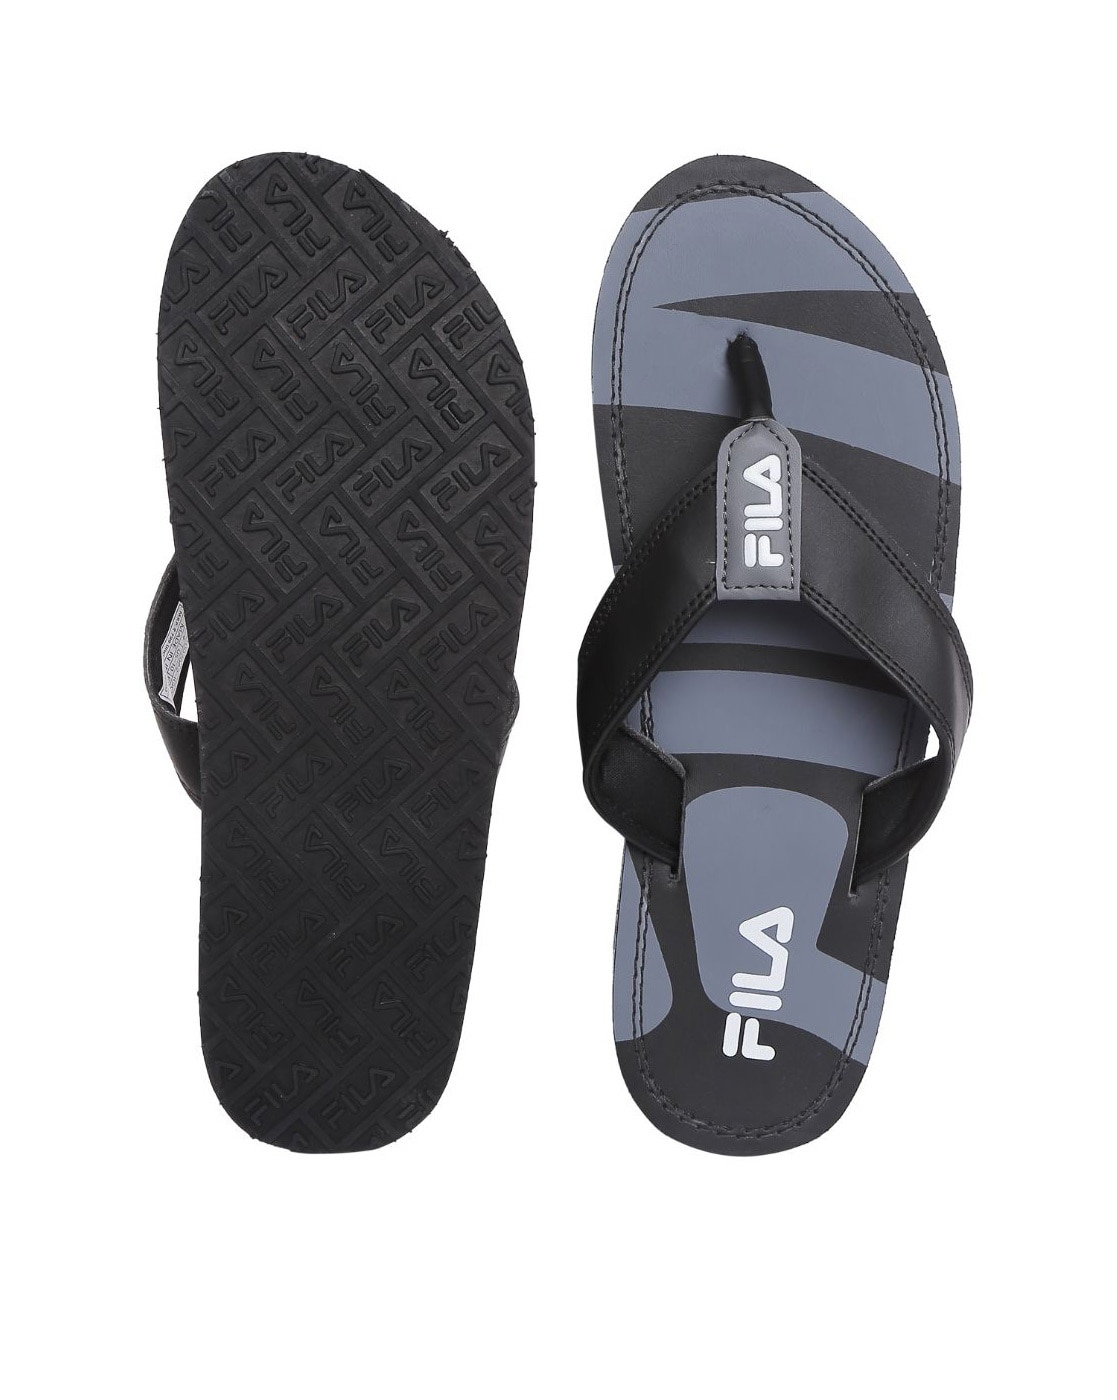 fila black slippers